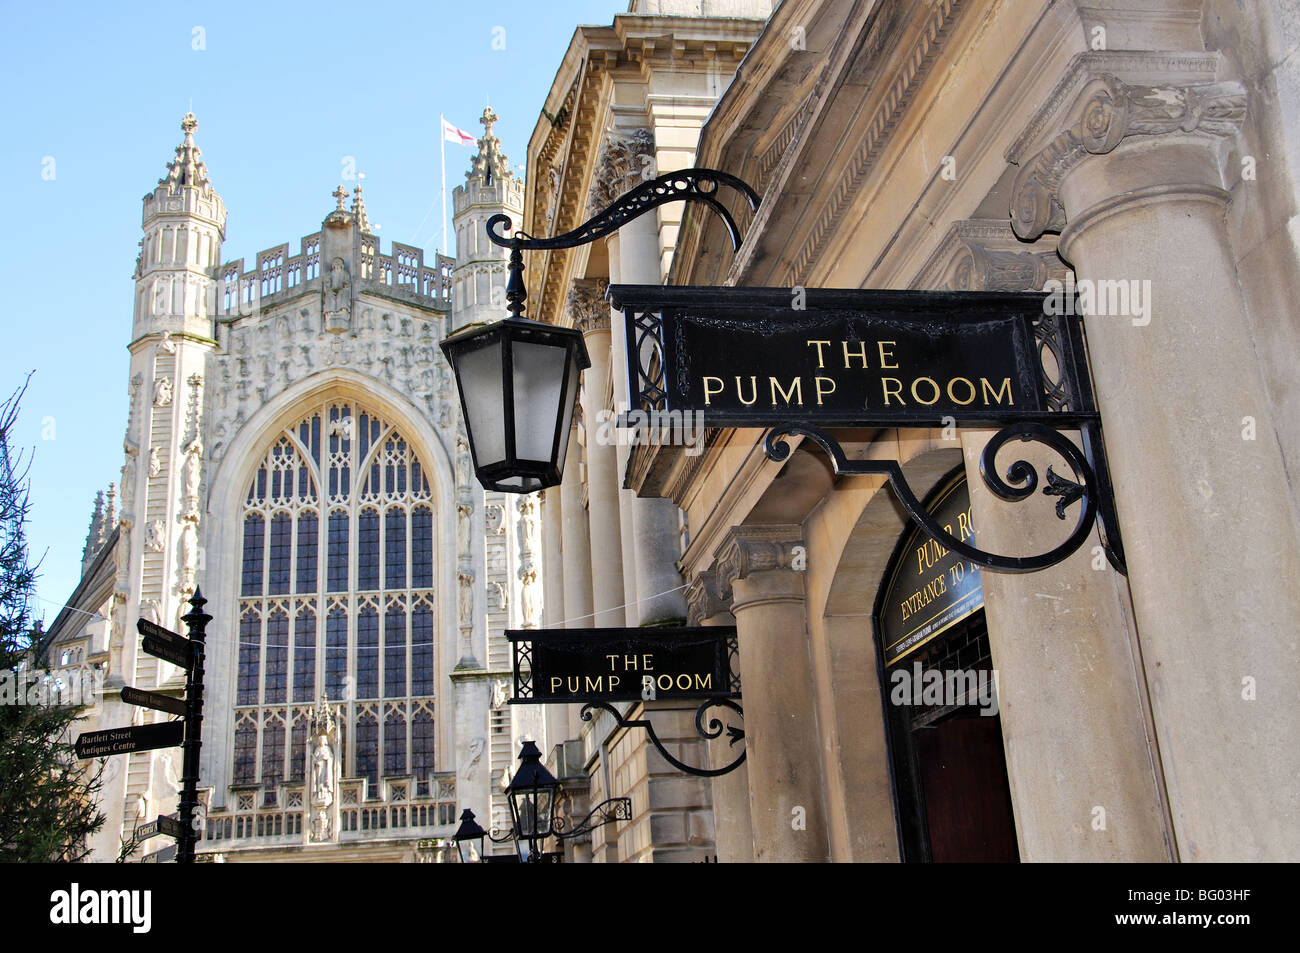 The Pump Room signs, The Roman Baths, Bath, Somerset, England, United Kingdom Stock Photo